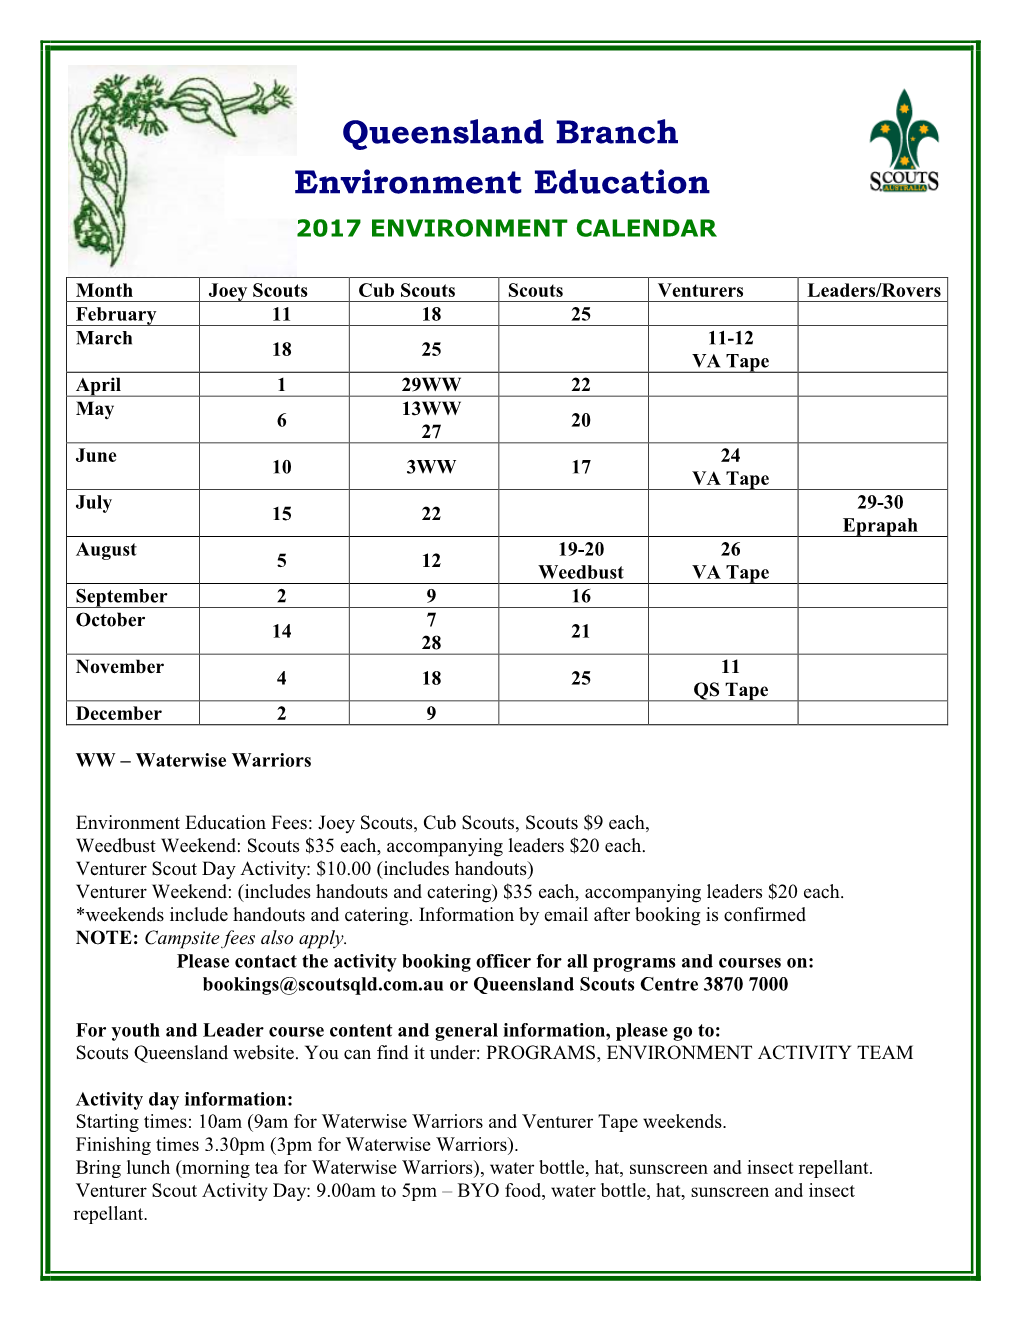 Queensland Branch Environment Education